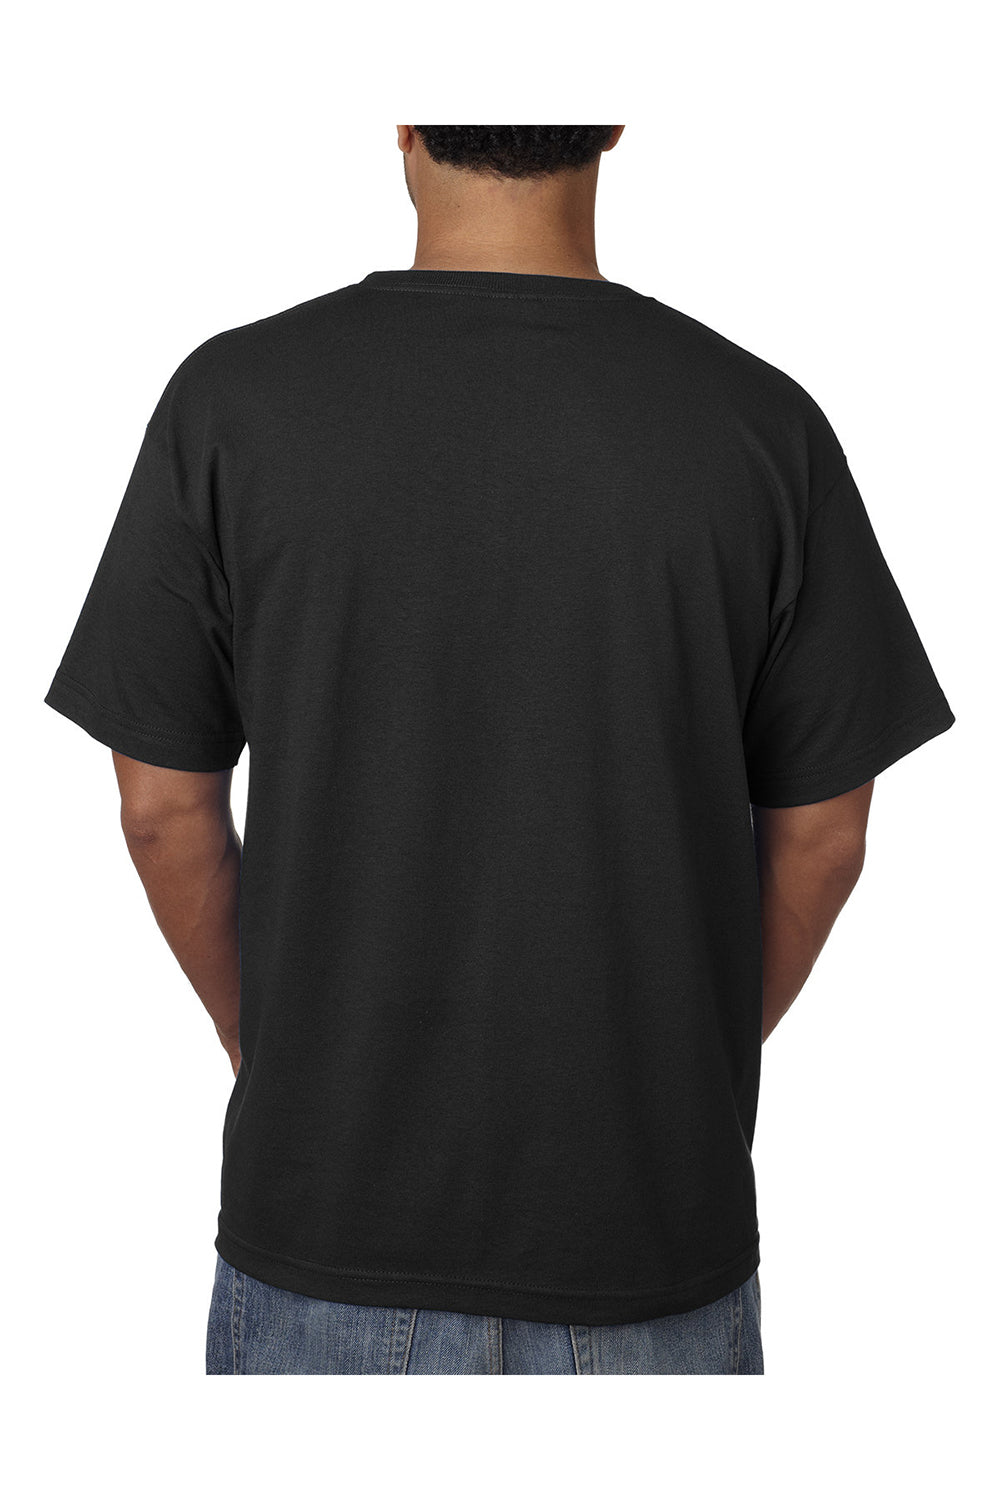 Bayside BA5070 Mens USA Made Short Sleeve Crewneck T-Shirt w/ Pocket Black Model Back